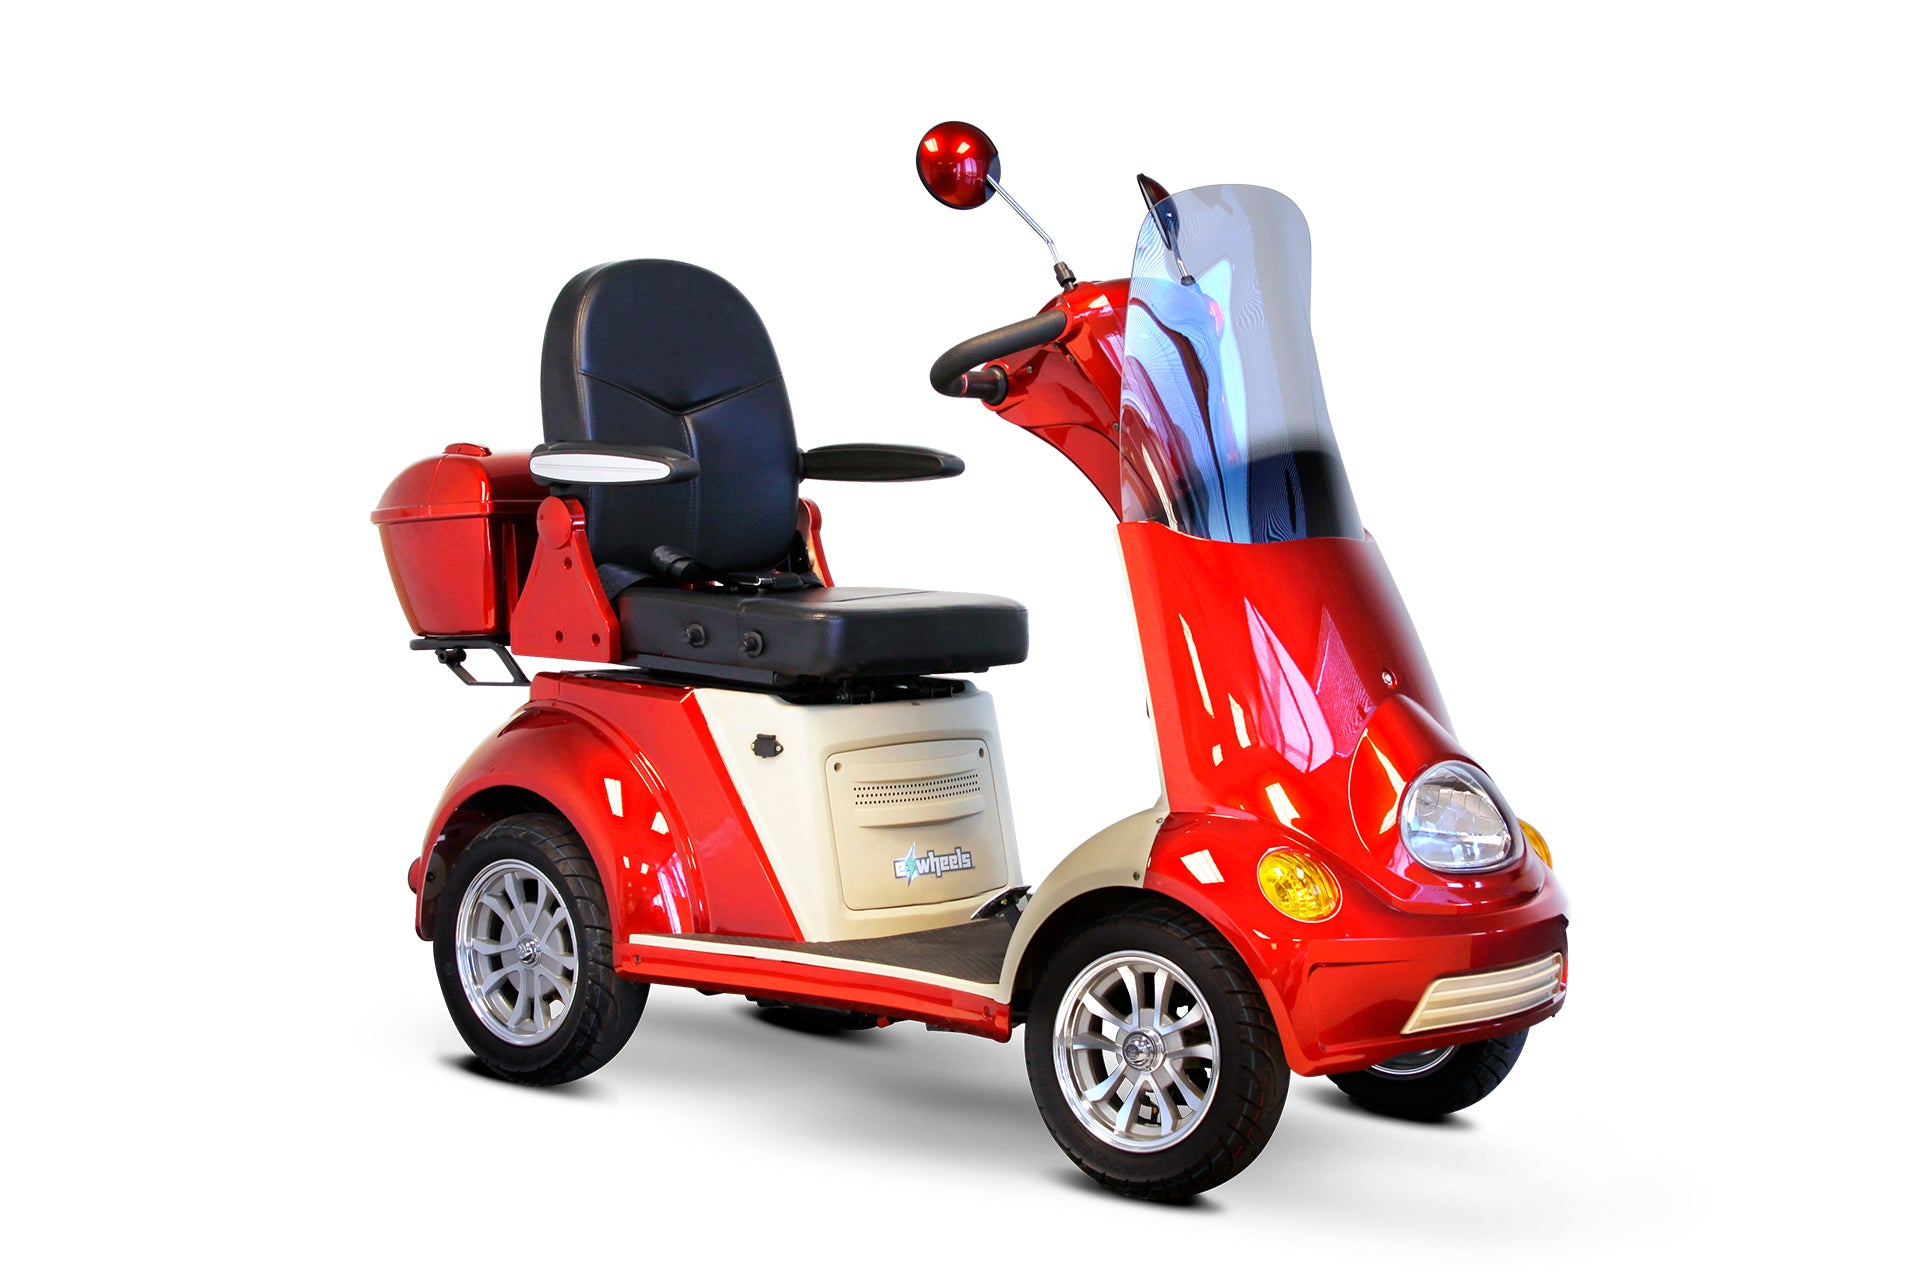 eWheels - 4 Wheel - Recreational Mobility Scooter - 500lbs Weight Capacity - EW-52